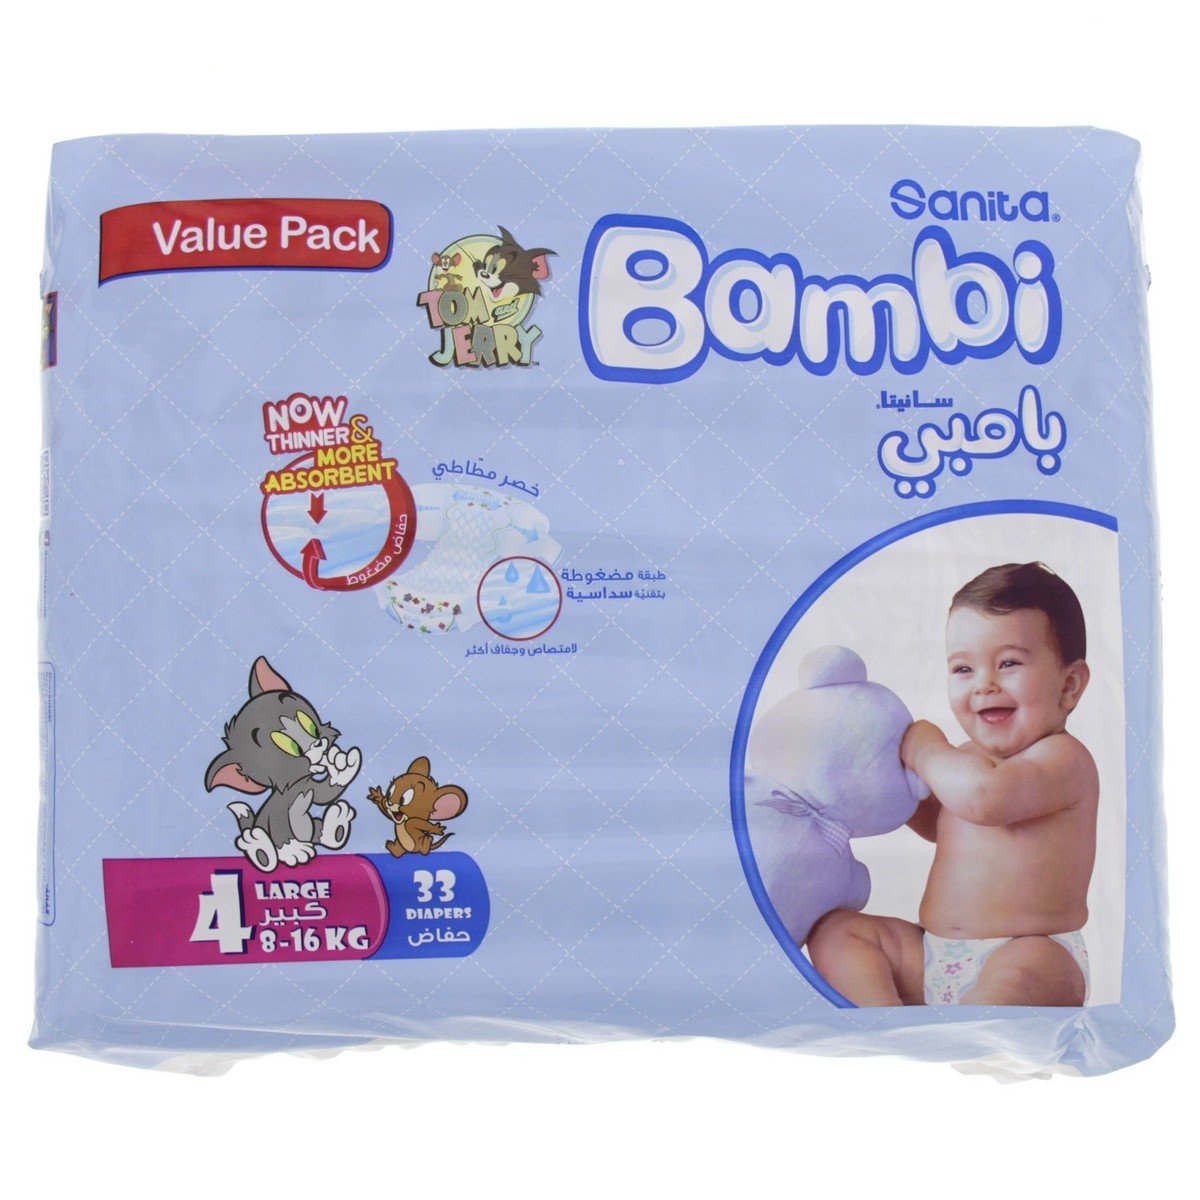 Sanita Bambi Baby Diaper Size 4 Large 8-16kg Value Pack 33pcs